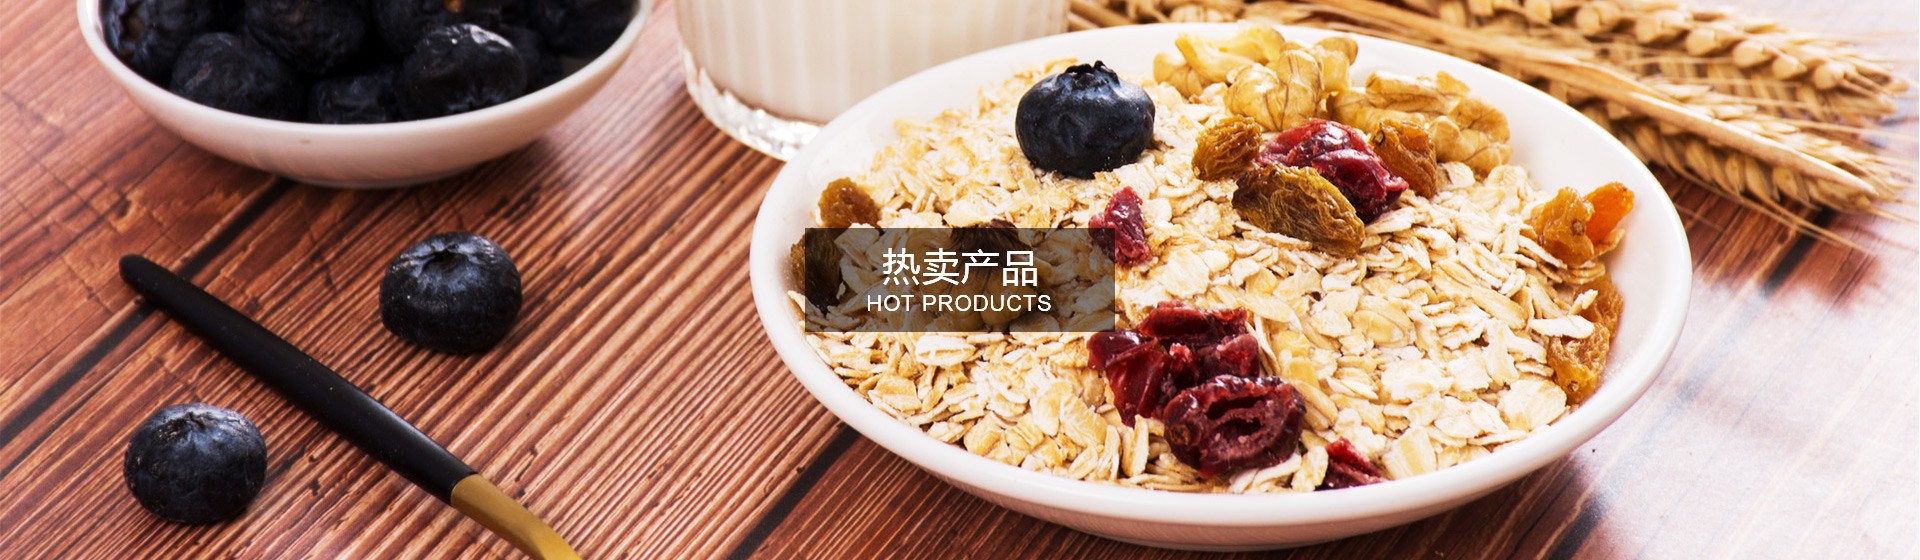 Shandong Mengsixiang Food Co., LTD